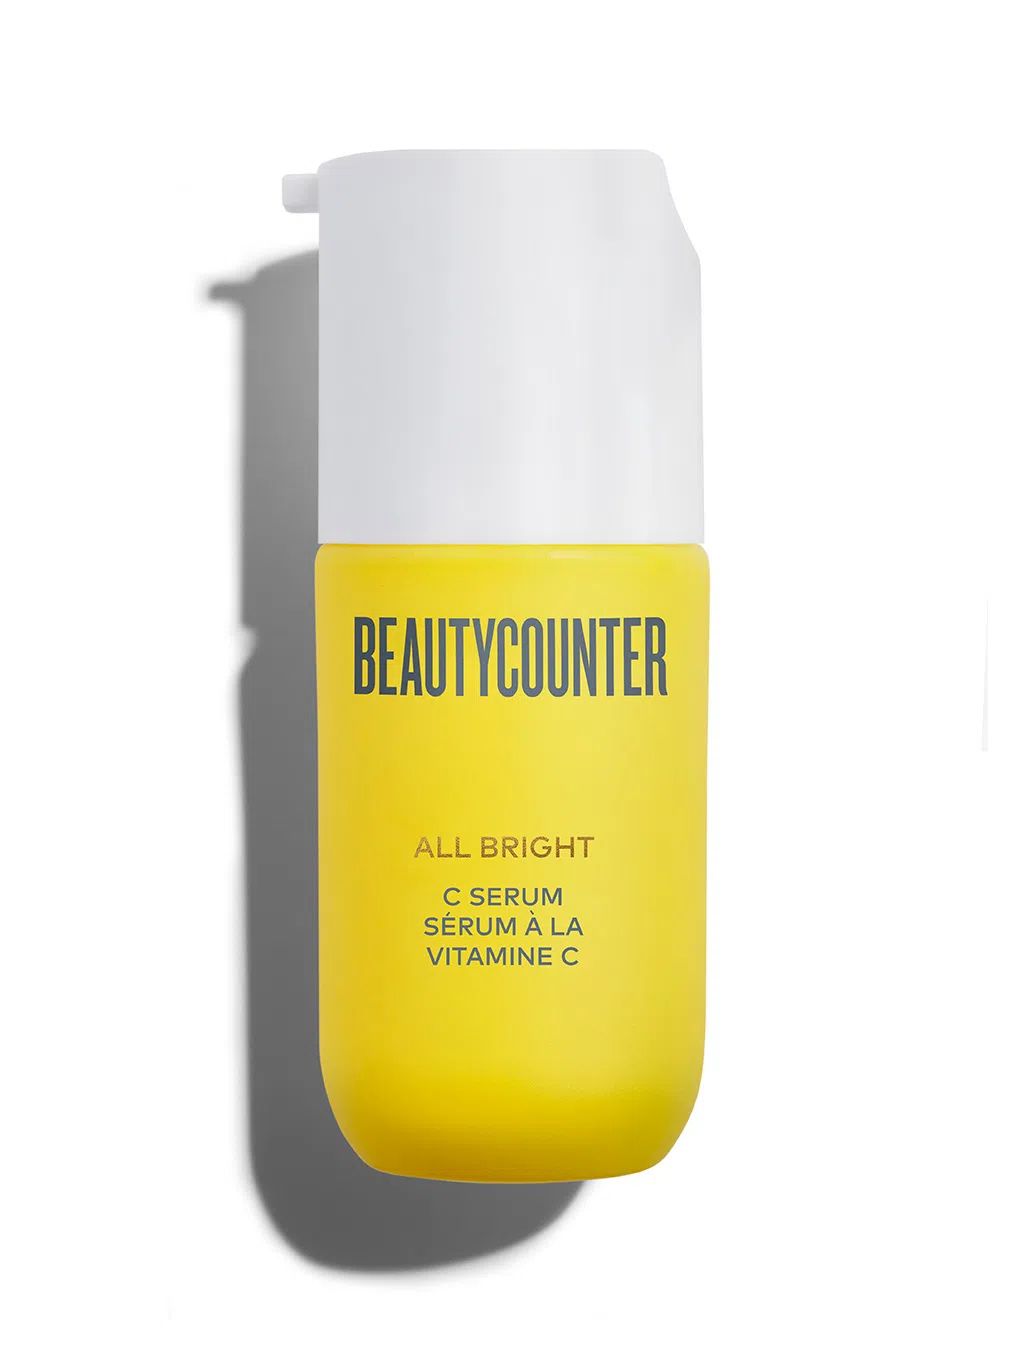 All Bright C Serum - Beautycounter - Skin Care, Makeup, Bath and Body and more! | Beautycounter.com